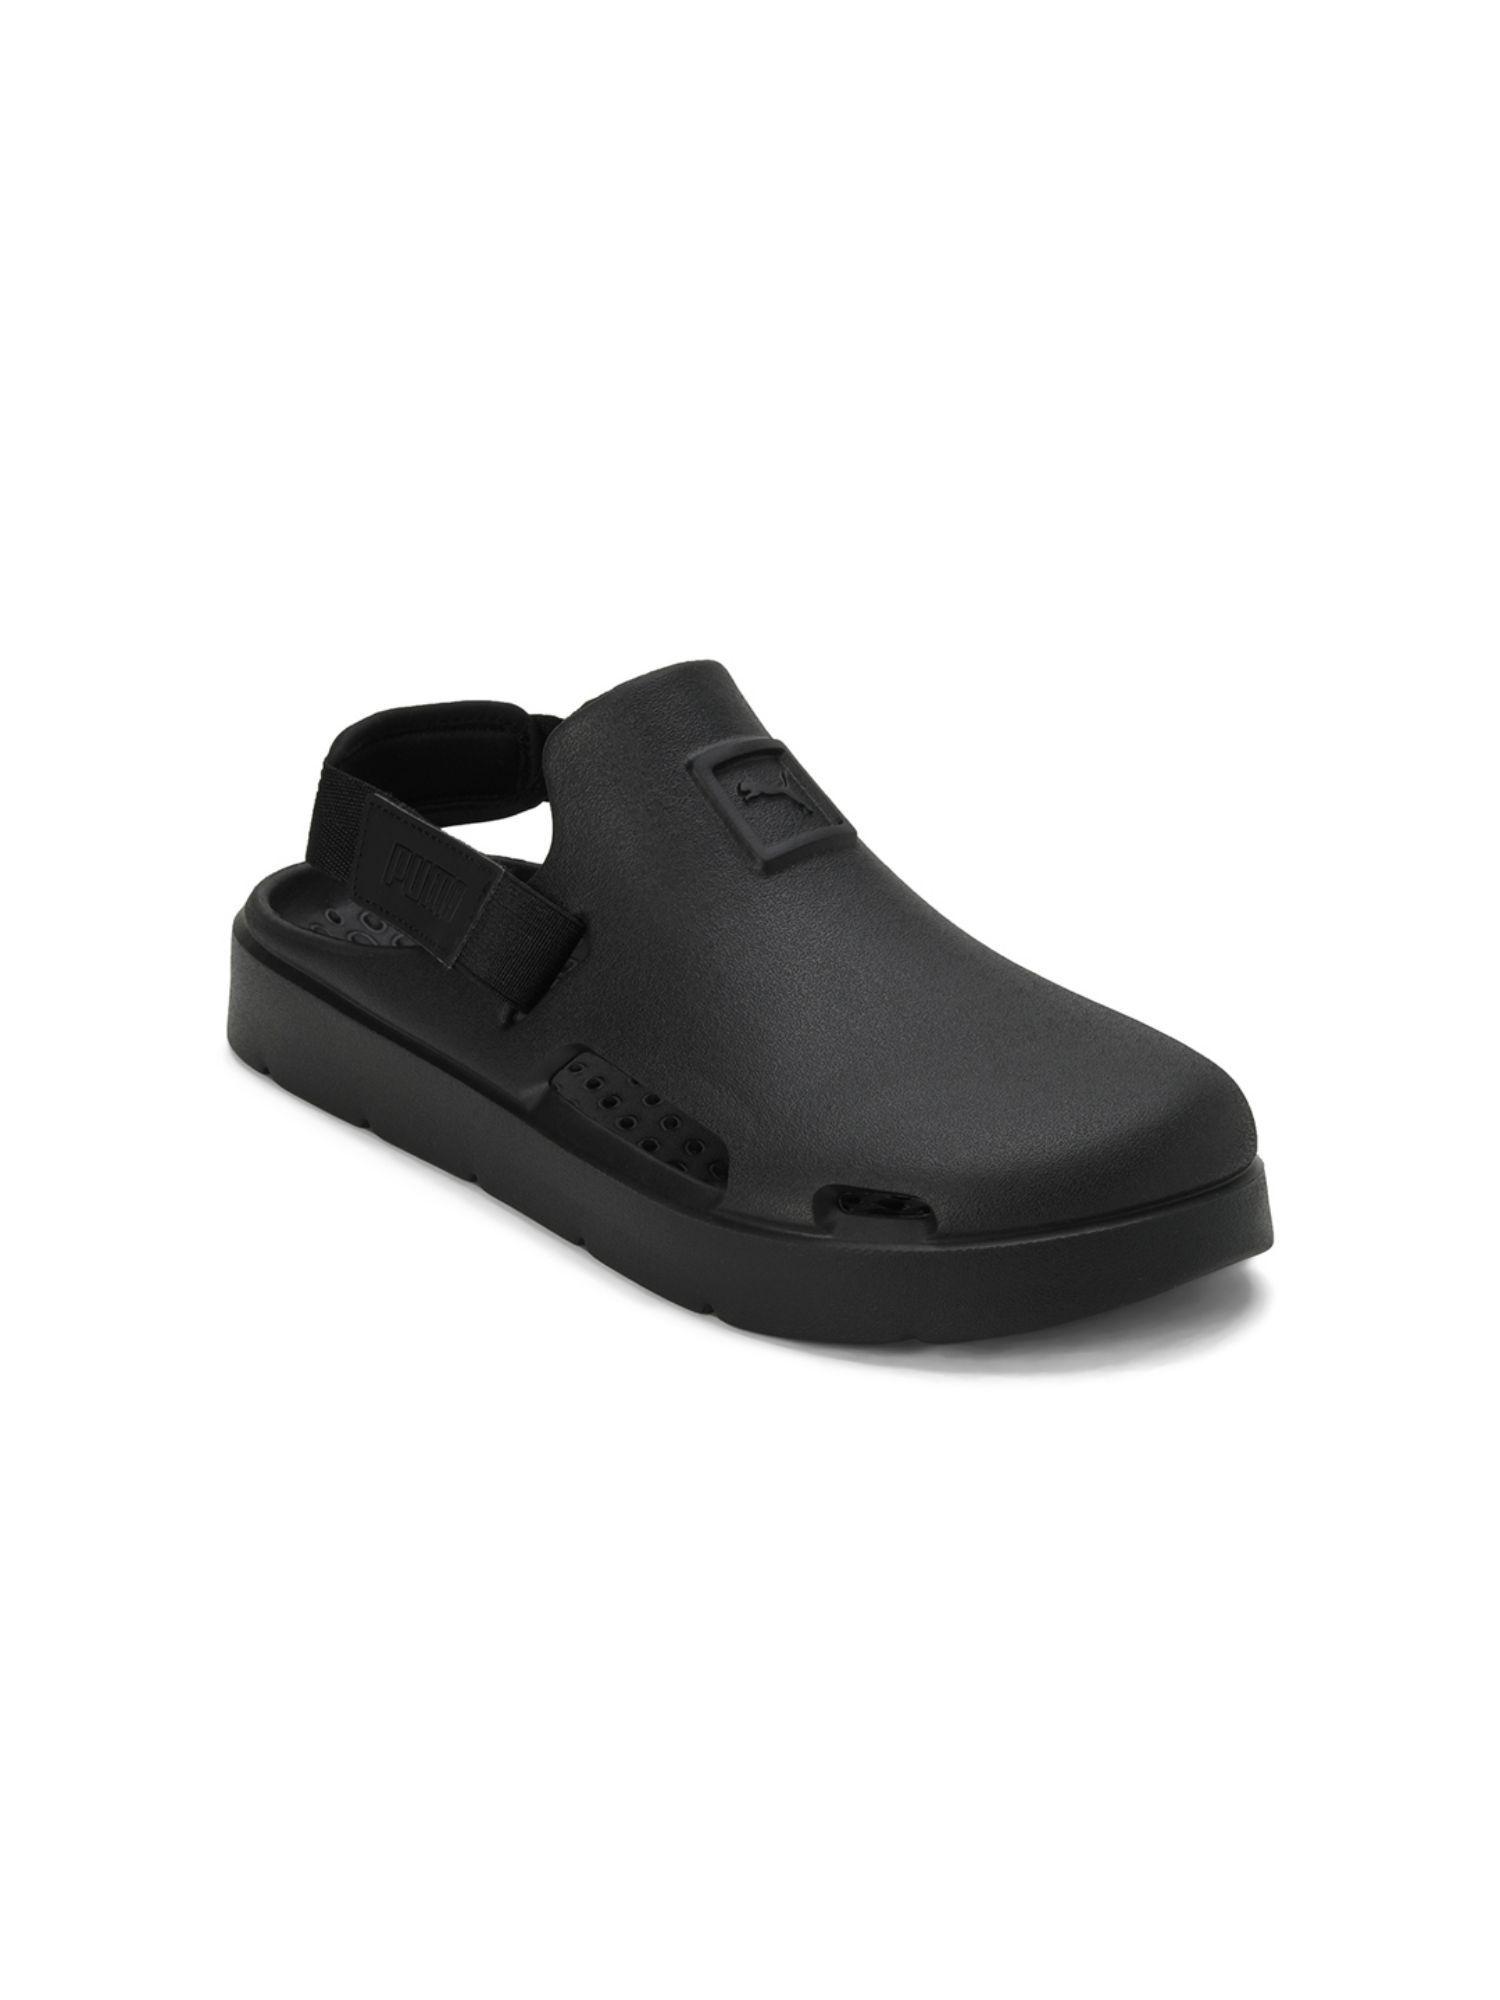 shibui mule unisex black sandals